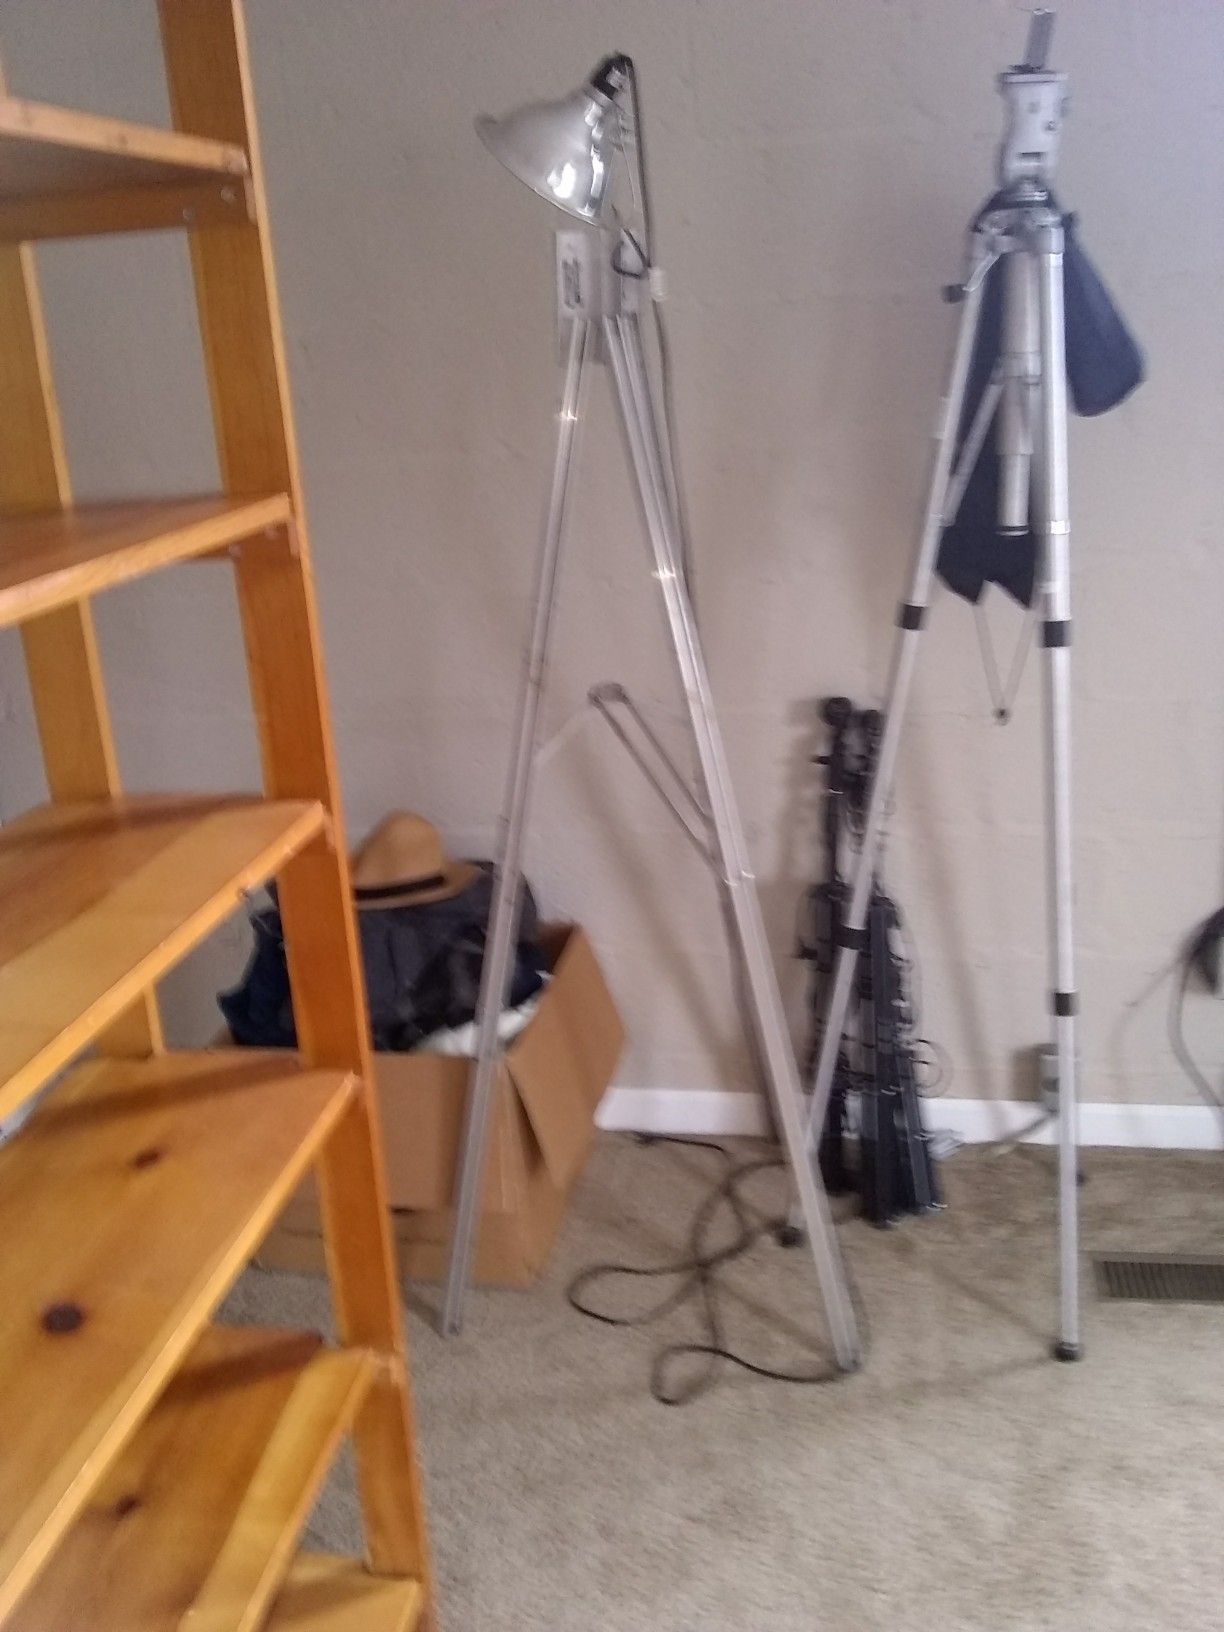 Photographer Equipment - Tripod Lights Stand, Tripod Camera Stand and 2 Small Tripod Light Stands